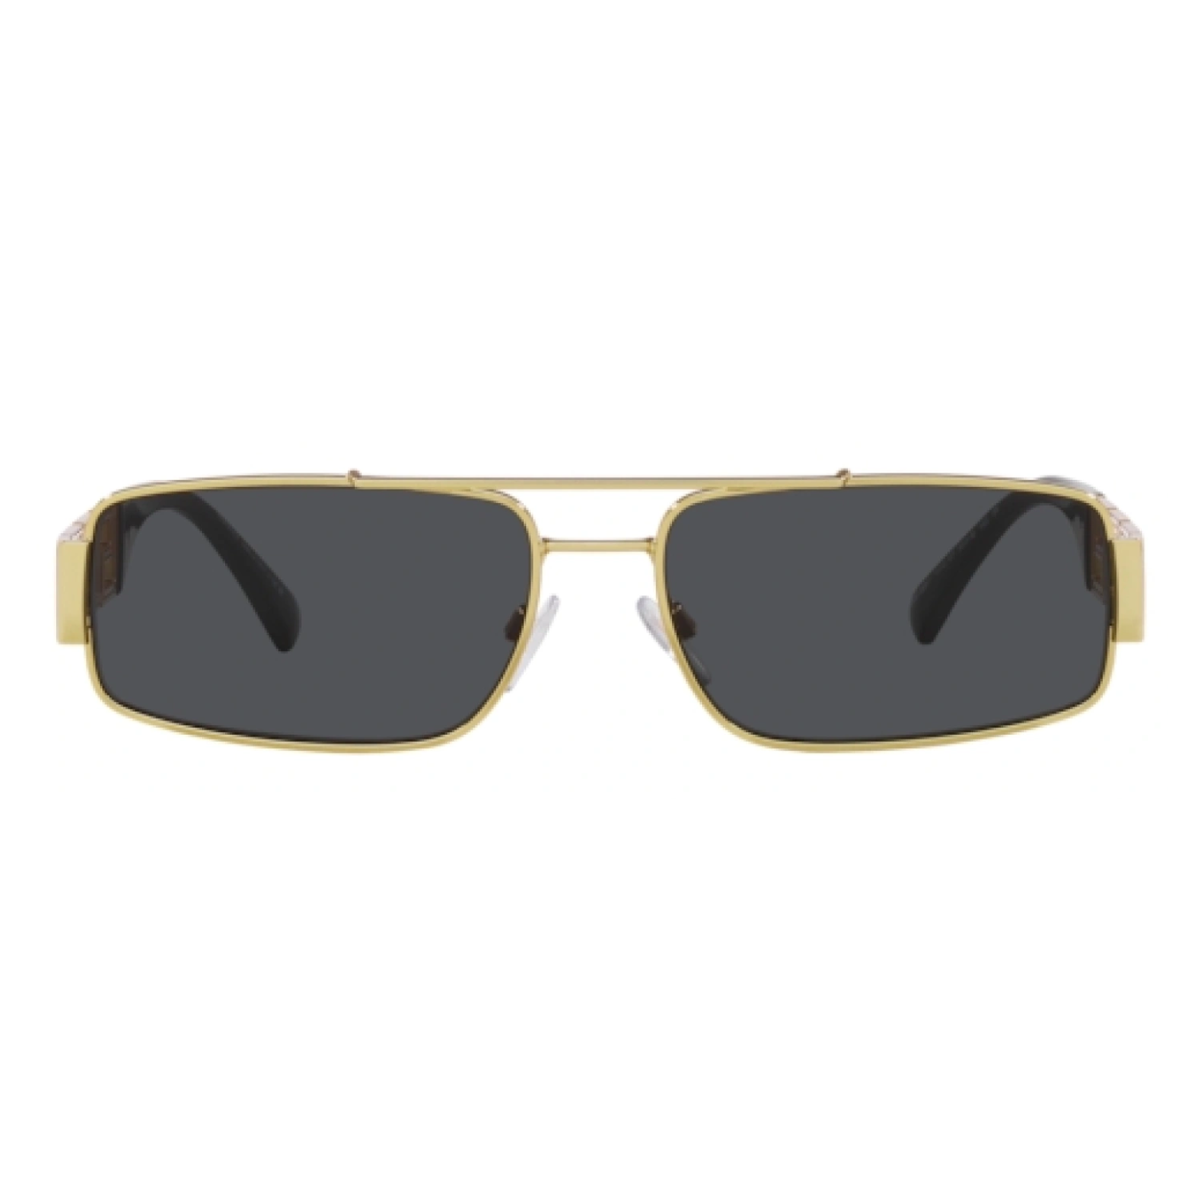 ""Versace 2257 1002/87 Sunglasses for Men at Optorium - sleek gold and black metal frame with dark grey lenses. Shop now at Optorium!"